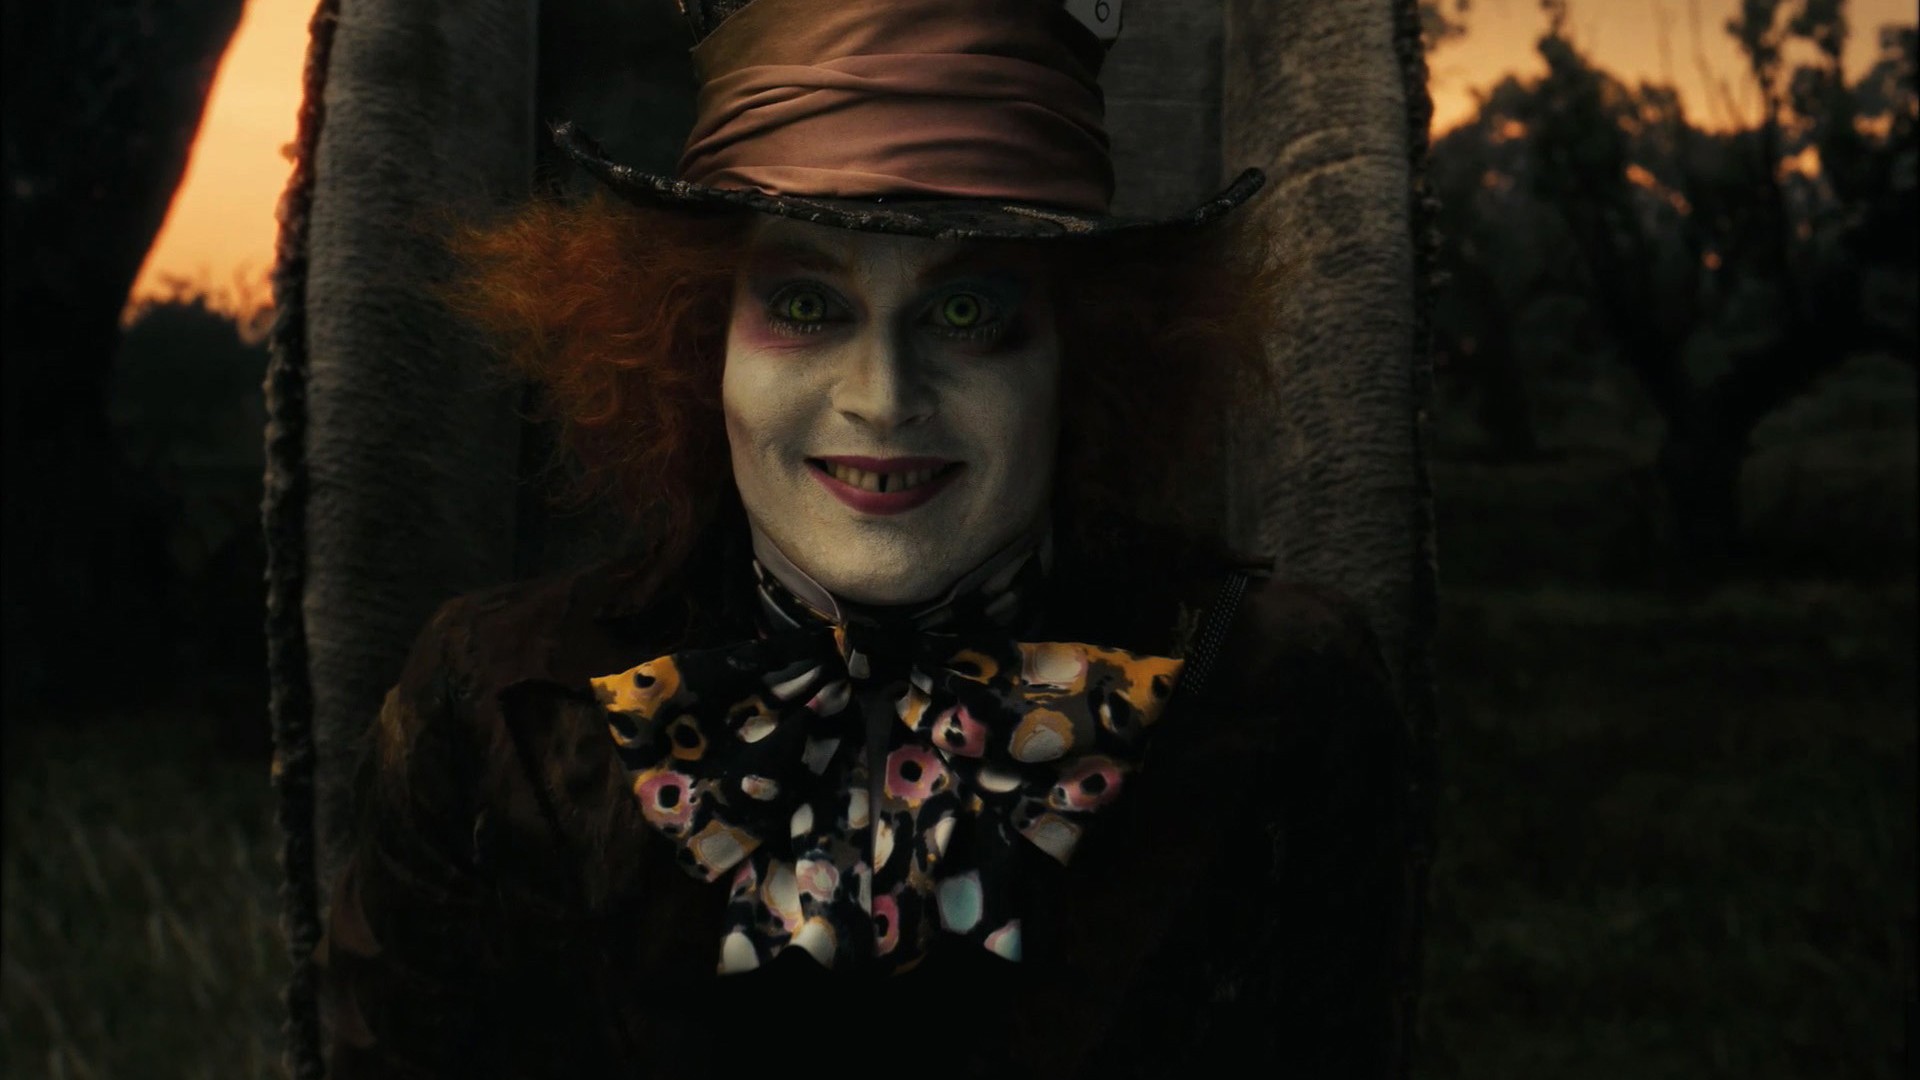 People 1920x1080 Alice in Wonderland Mad Hatter Johnny Depp film stills movies makeup